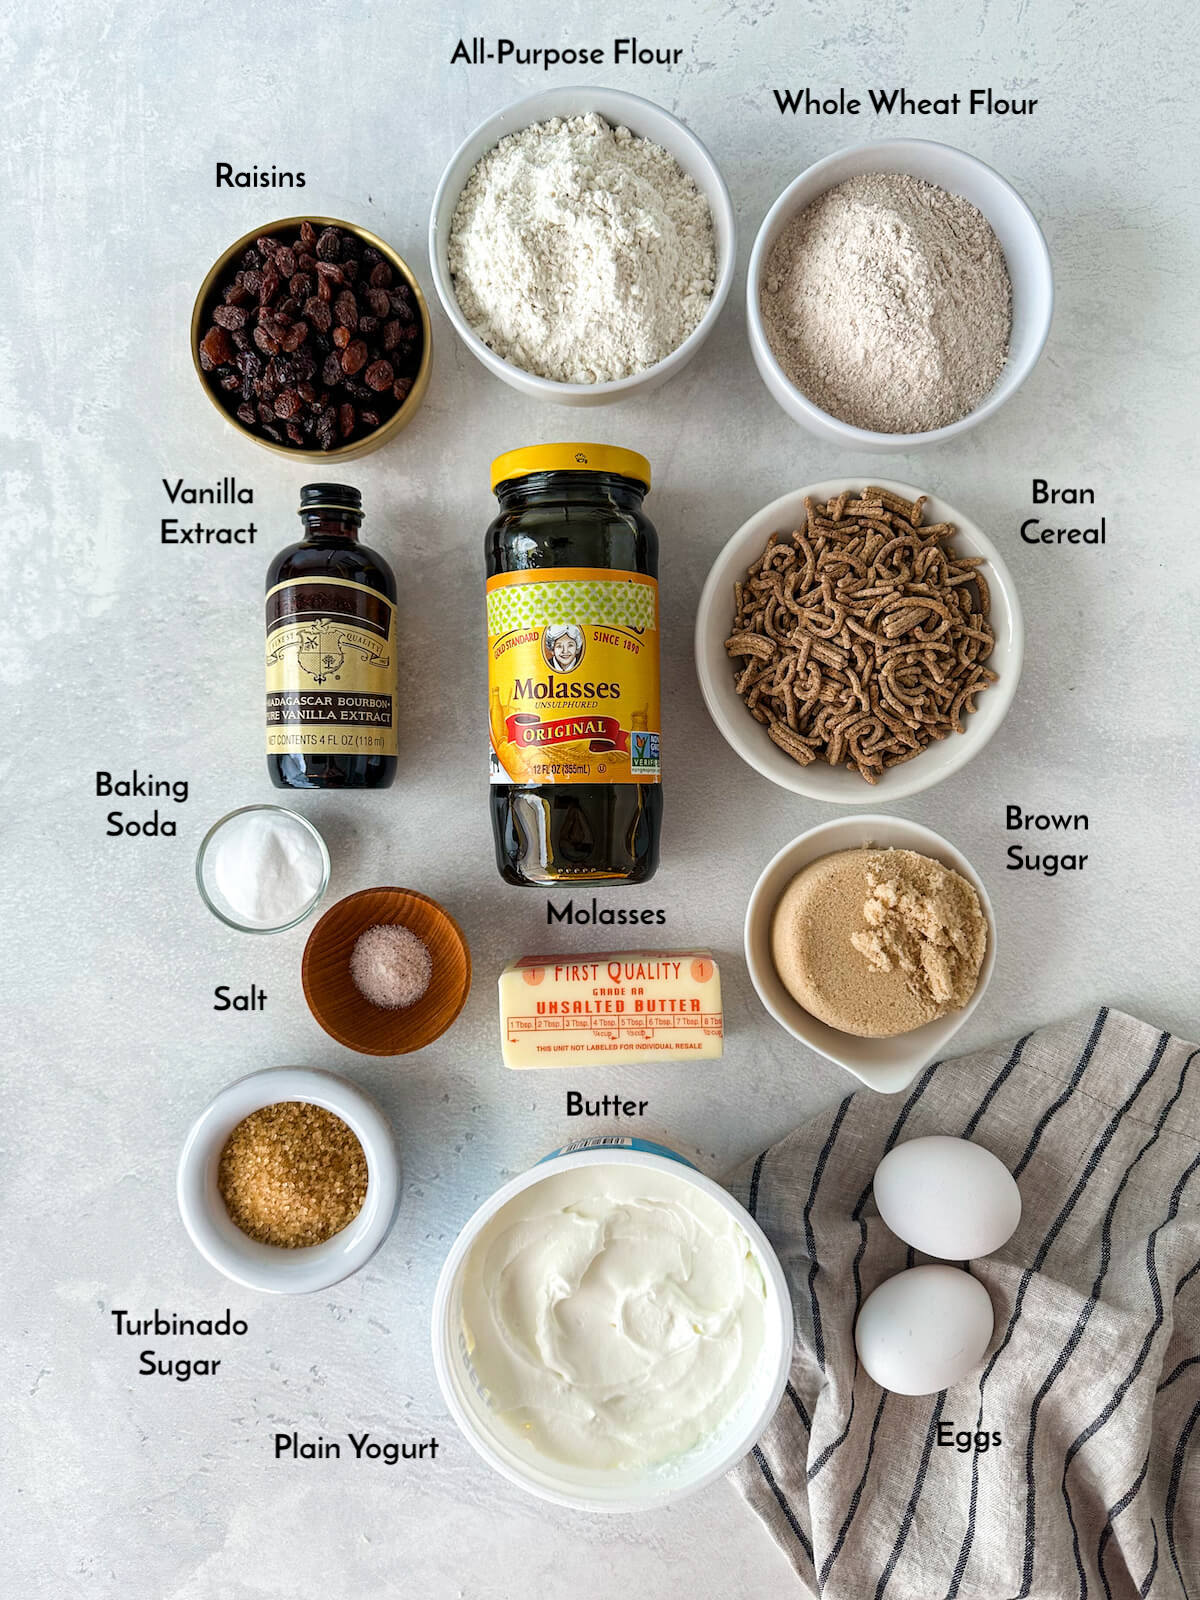 Ingredients for bran muffins in bowls including: flour, whole wheat flour, raisins, bran cereal, molasses, vanilla extract, baking soda, salt, butter, brown sugar, turbinado sugar, plain yogurt, and eggs.